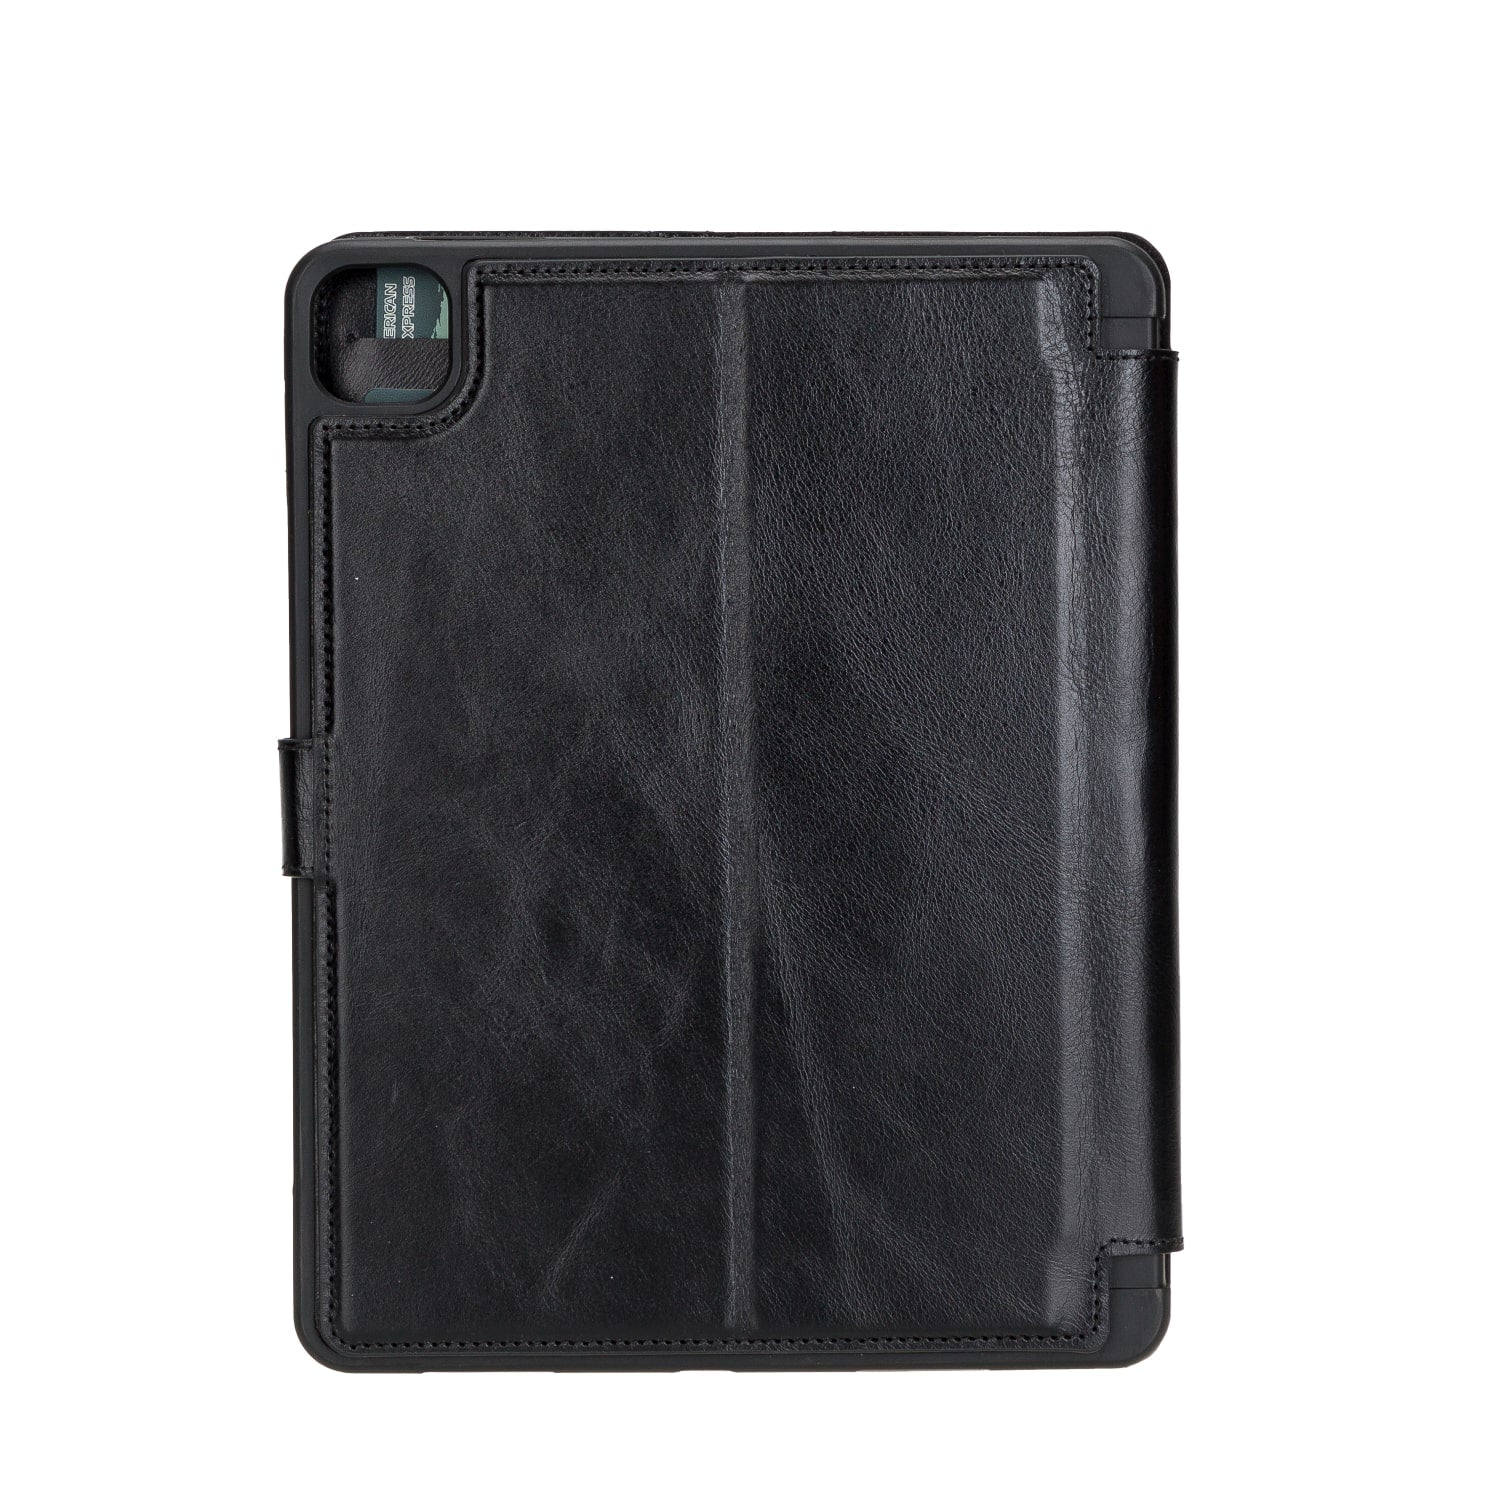 Black Leather iPad Pro 11 Inc Smart Folio Case with Apple Pen Holder - Bomonti - 4